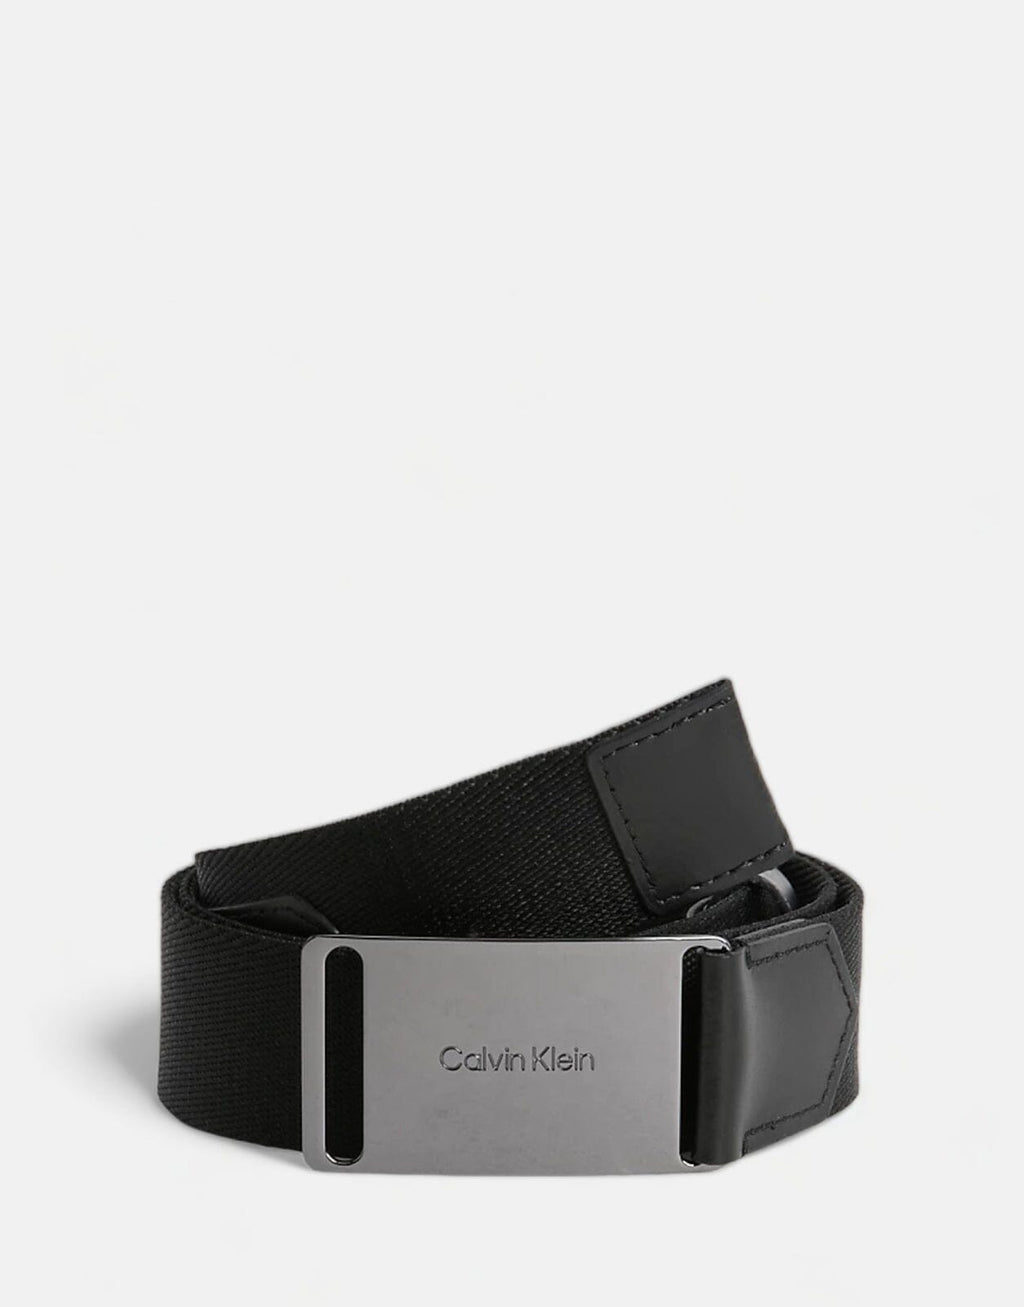 Calvin Klein Plaque 35mm Belt Webbing